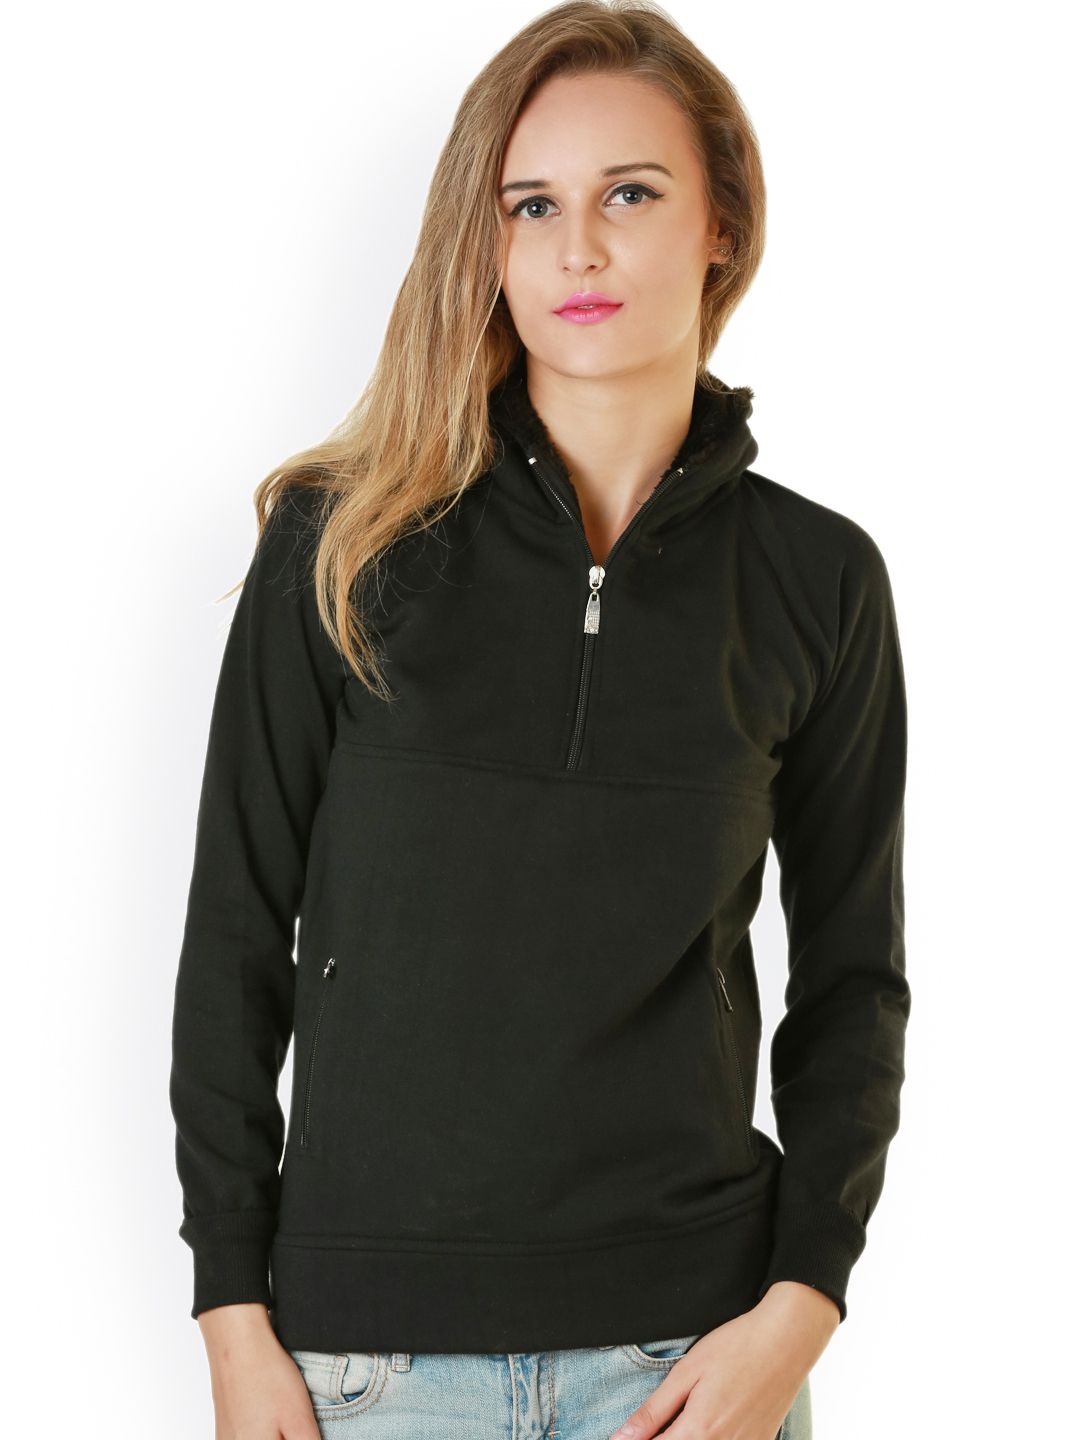 Belle Fille Black Solid Hooded Sweatshirt Price in India